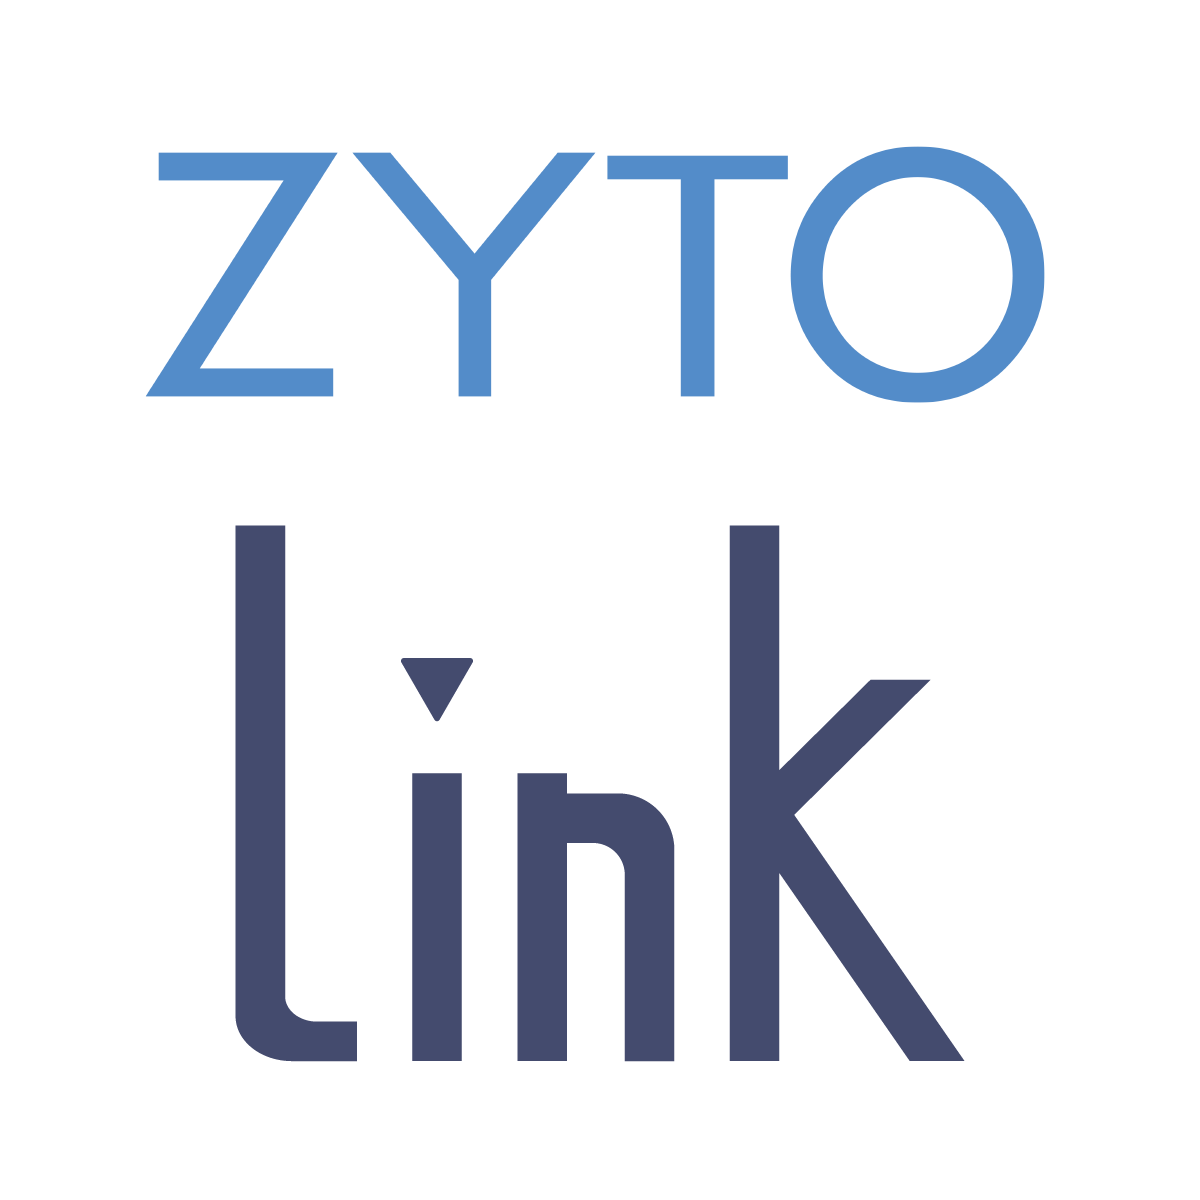 zyto link logo - light blue and dark blue